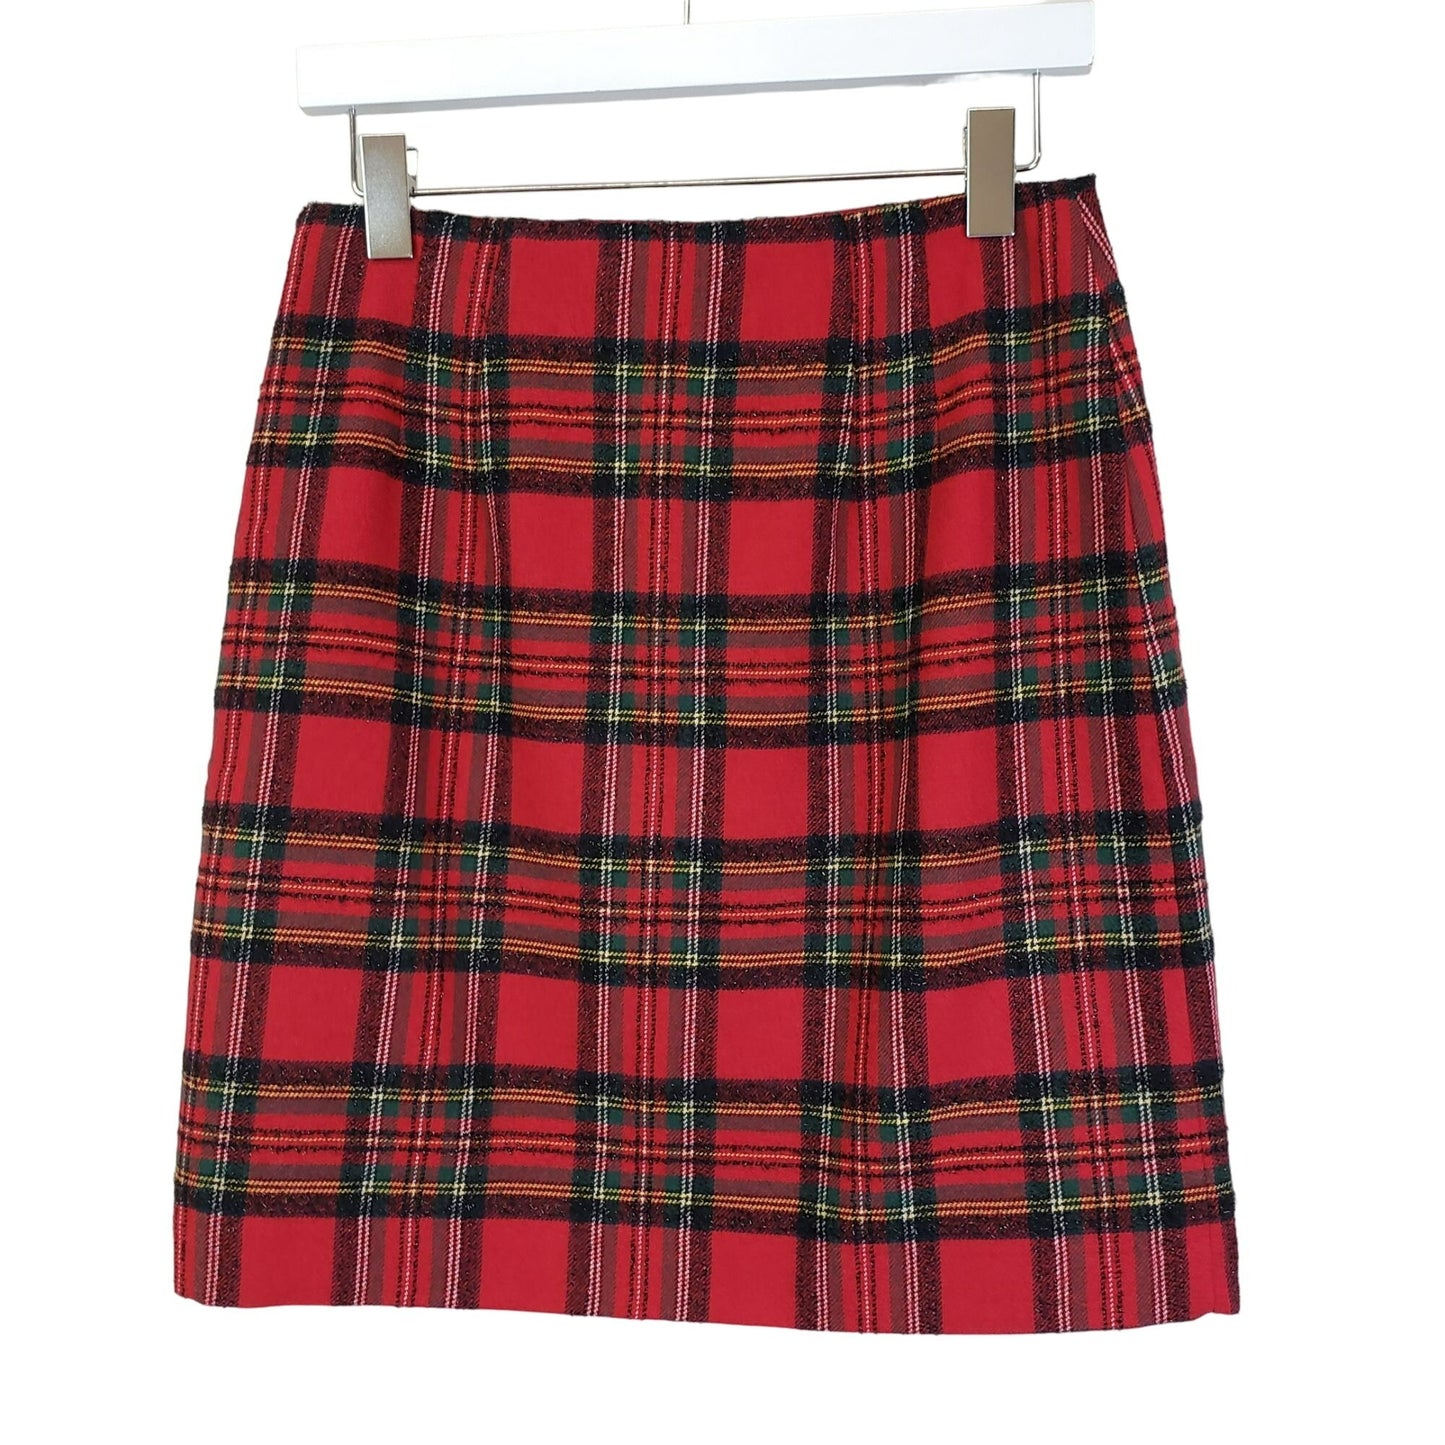 NWT Talbots Wool Blend Plaid Embellished Pencil Skirt 2 Petite